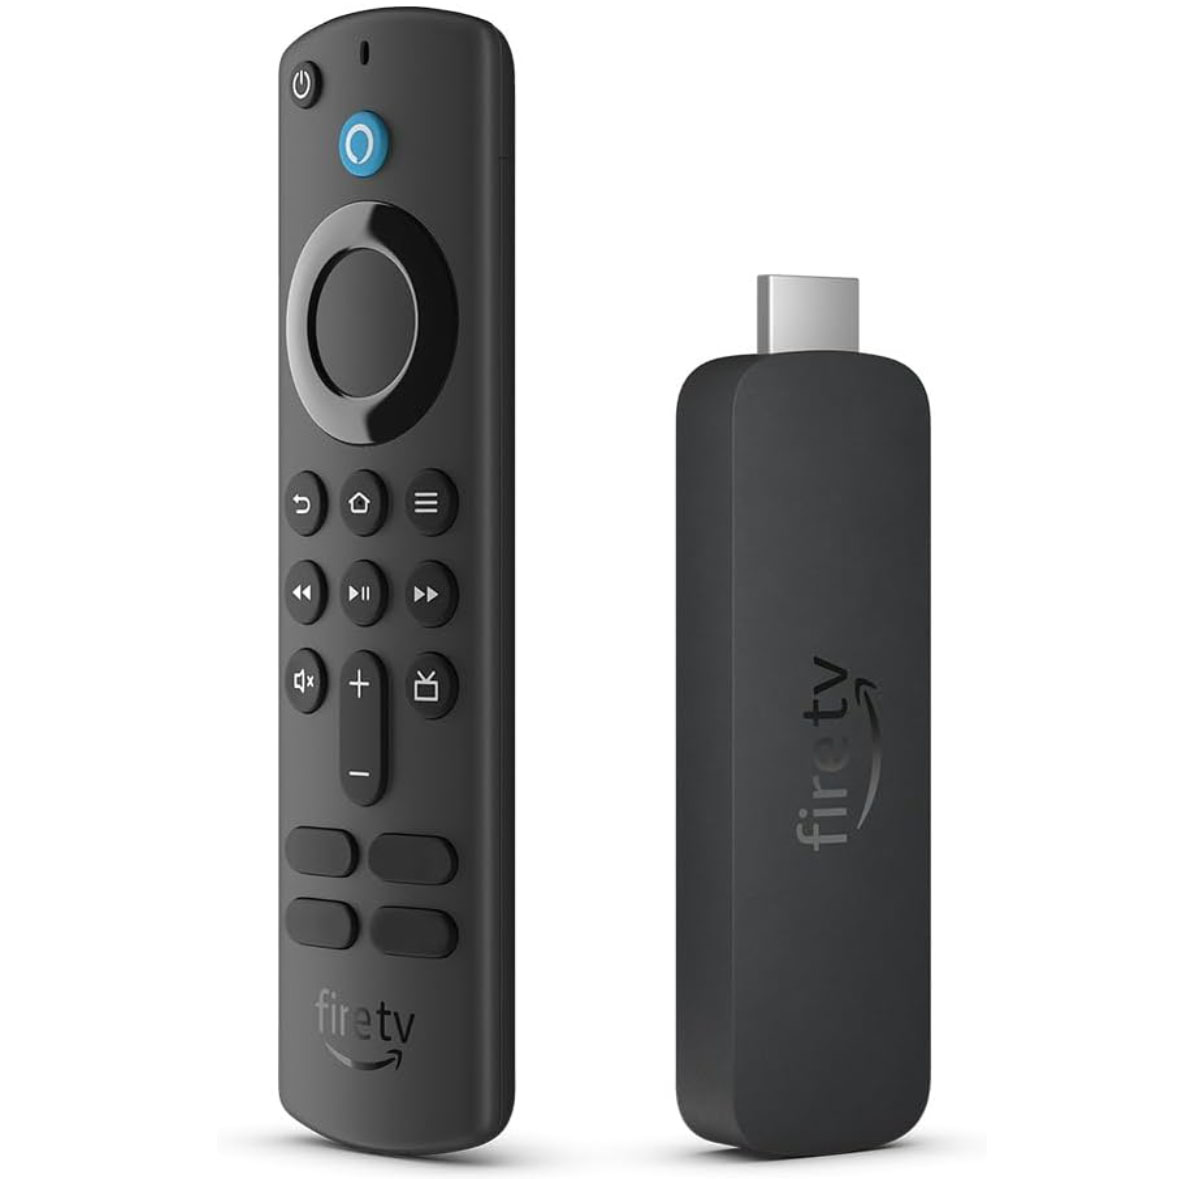 Amazon Fire TV Stick 4K device and remote